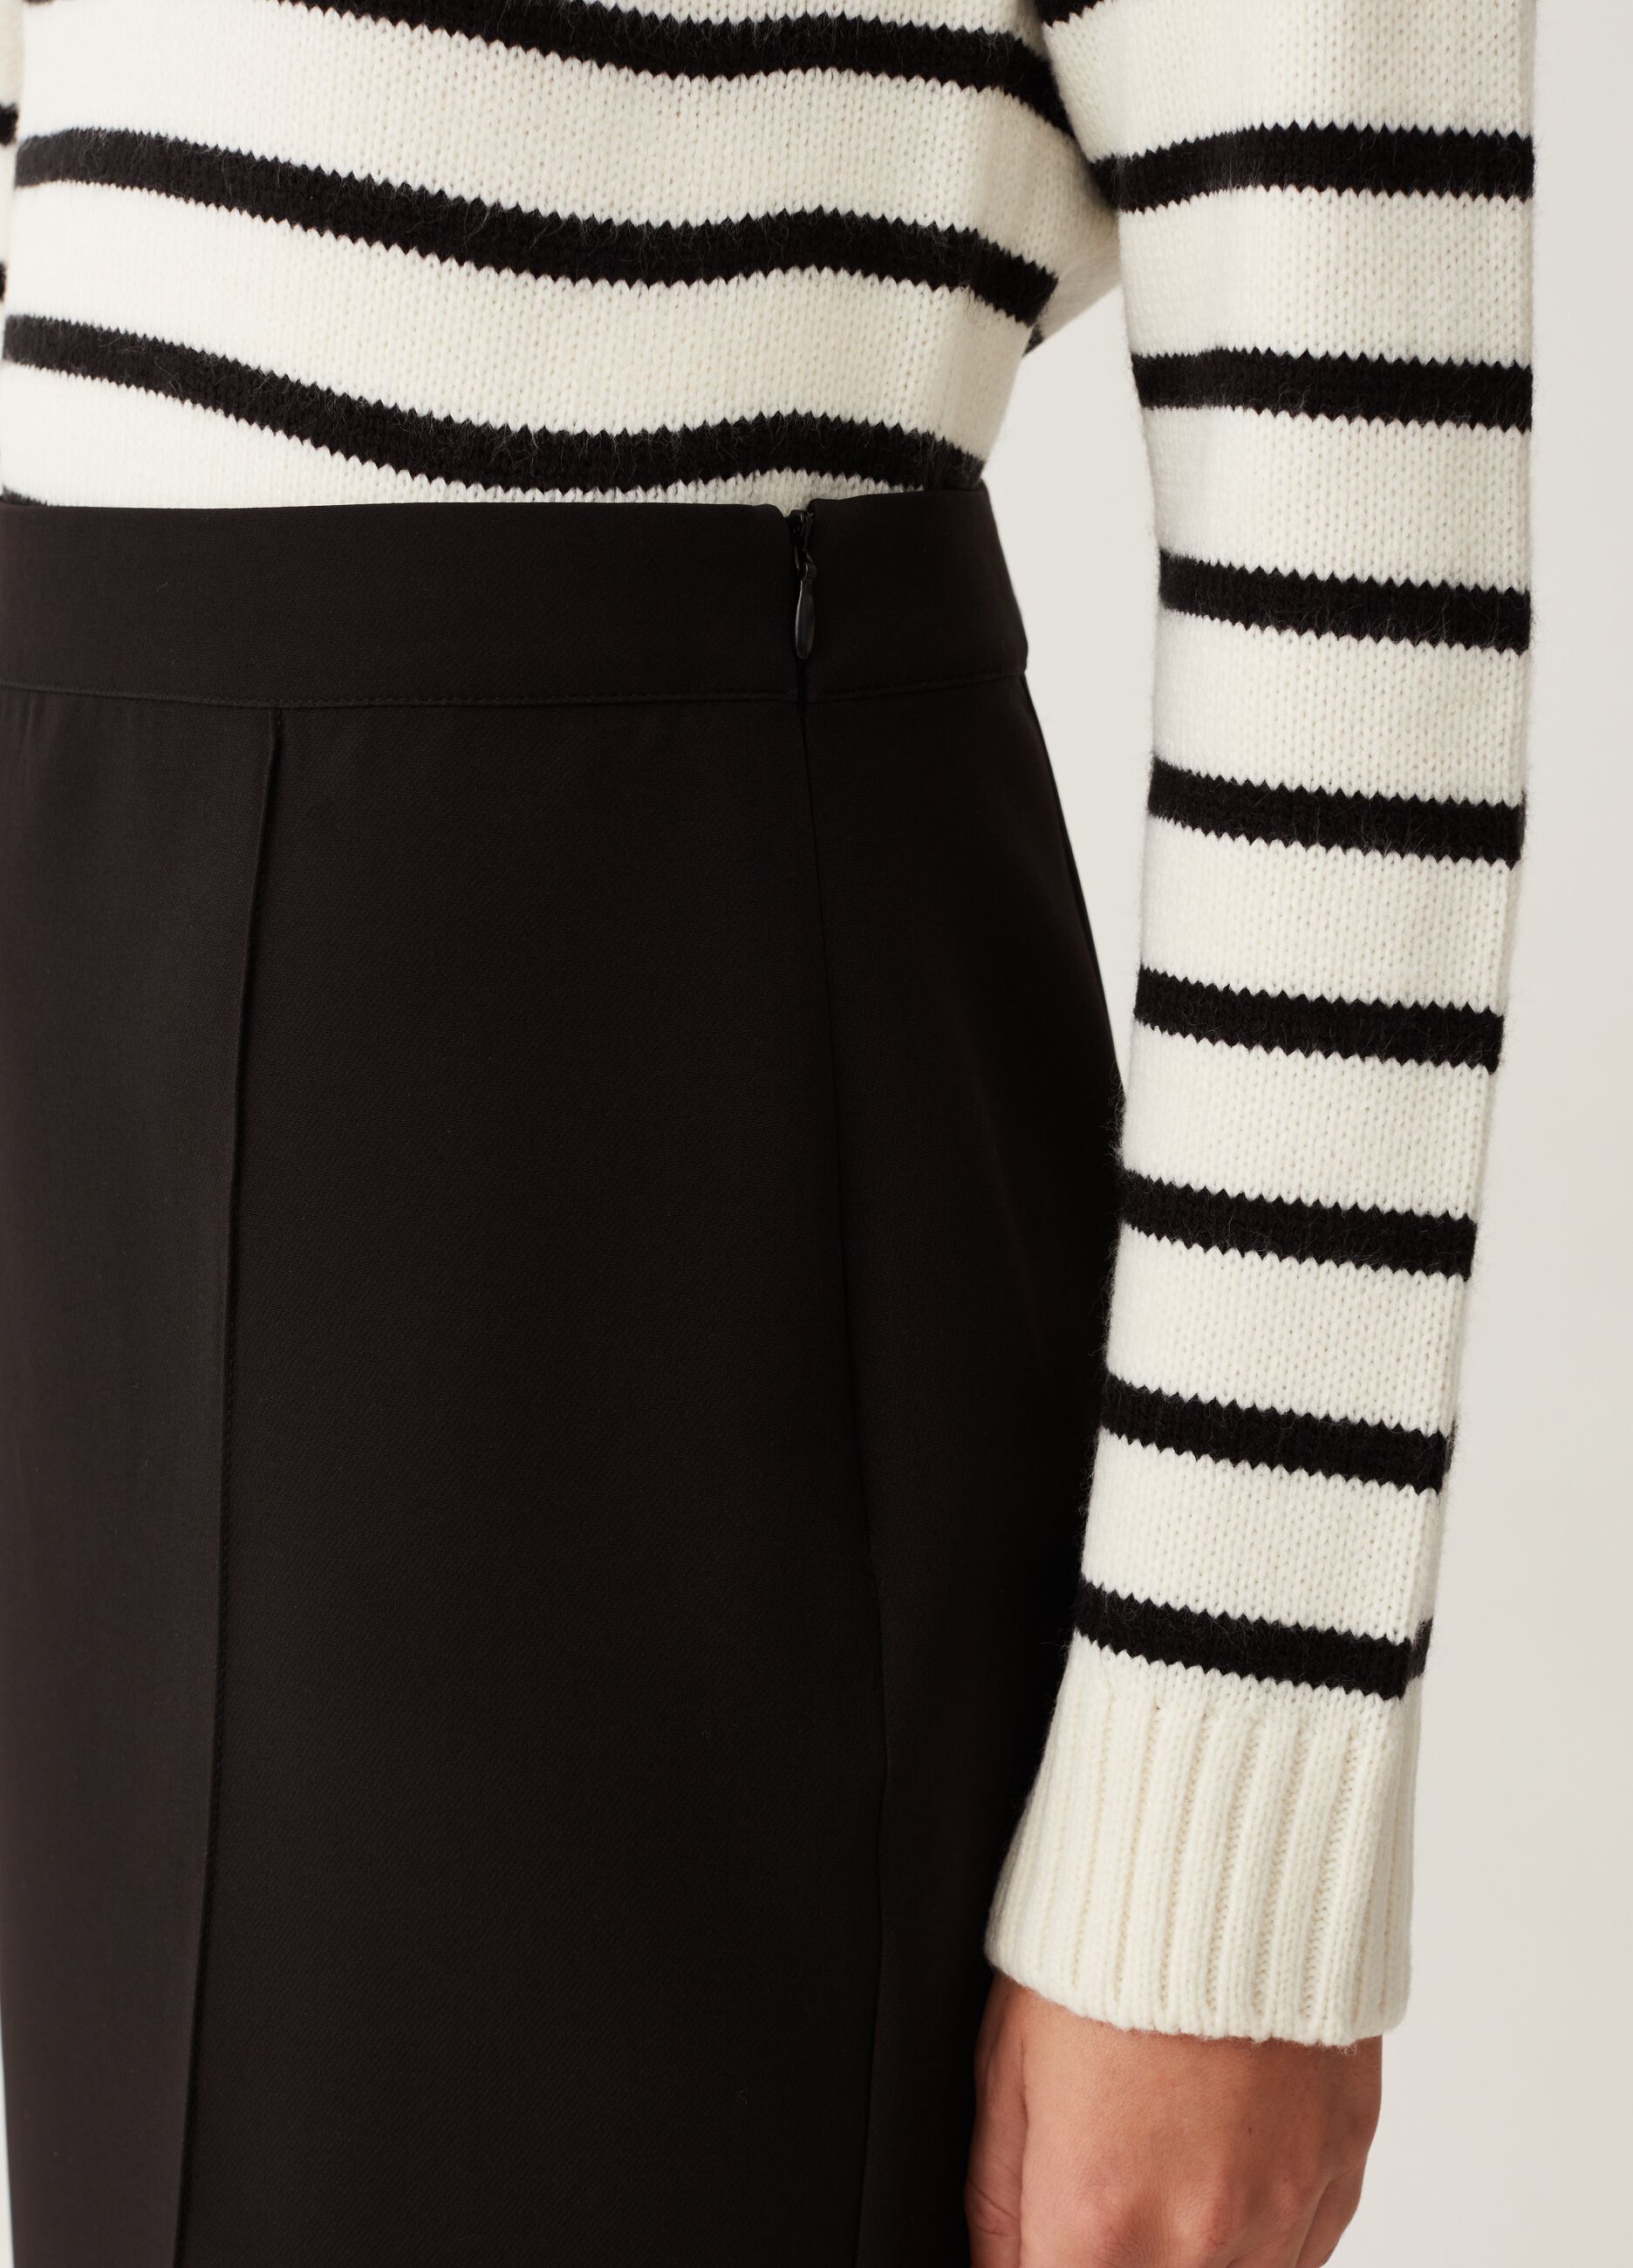 Midi pencil skirt with raised stitching